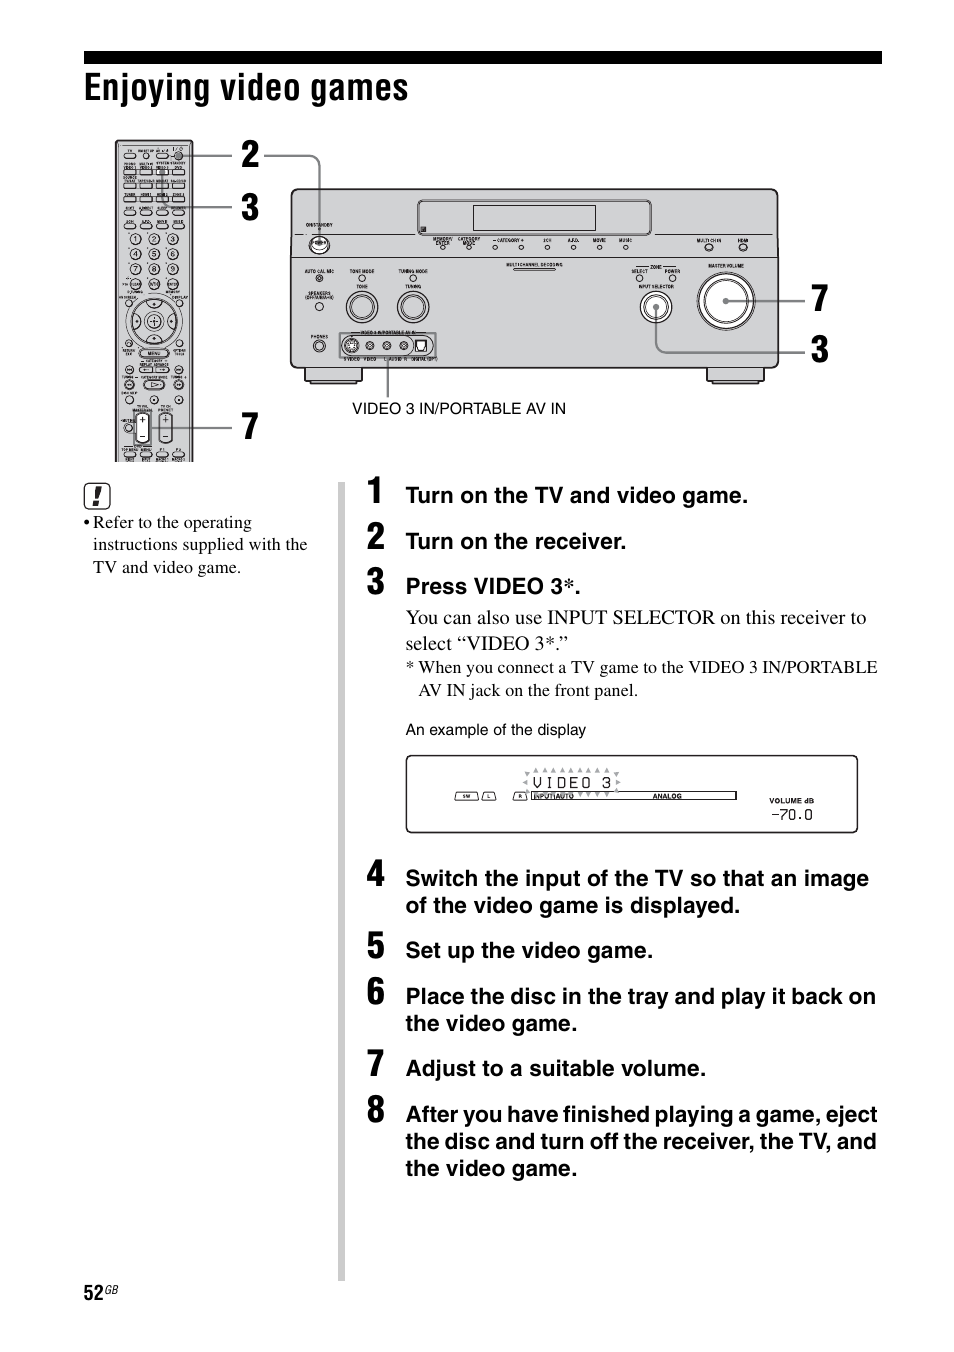 Enjoying video games | Sony STR-DG1000 User Manual | Page 52 / 123